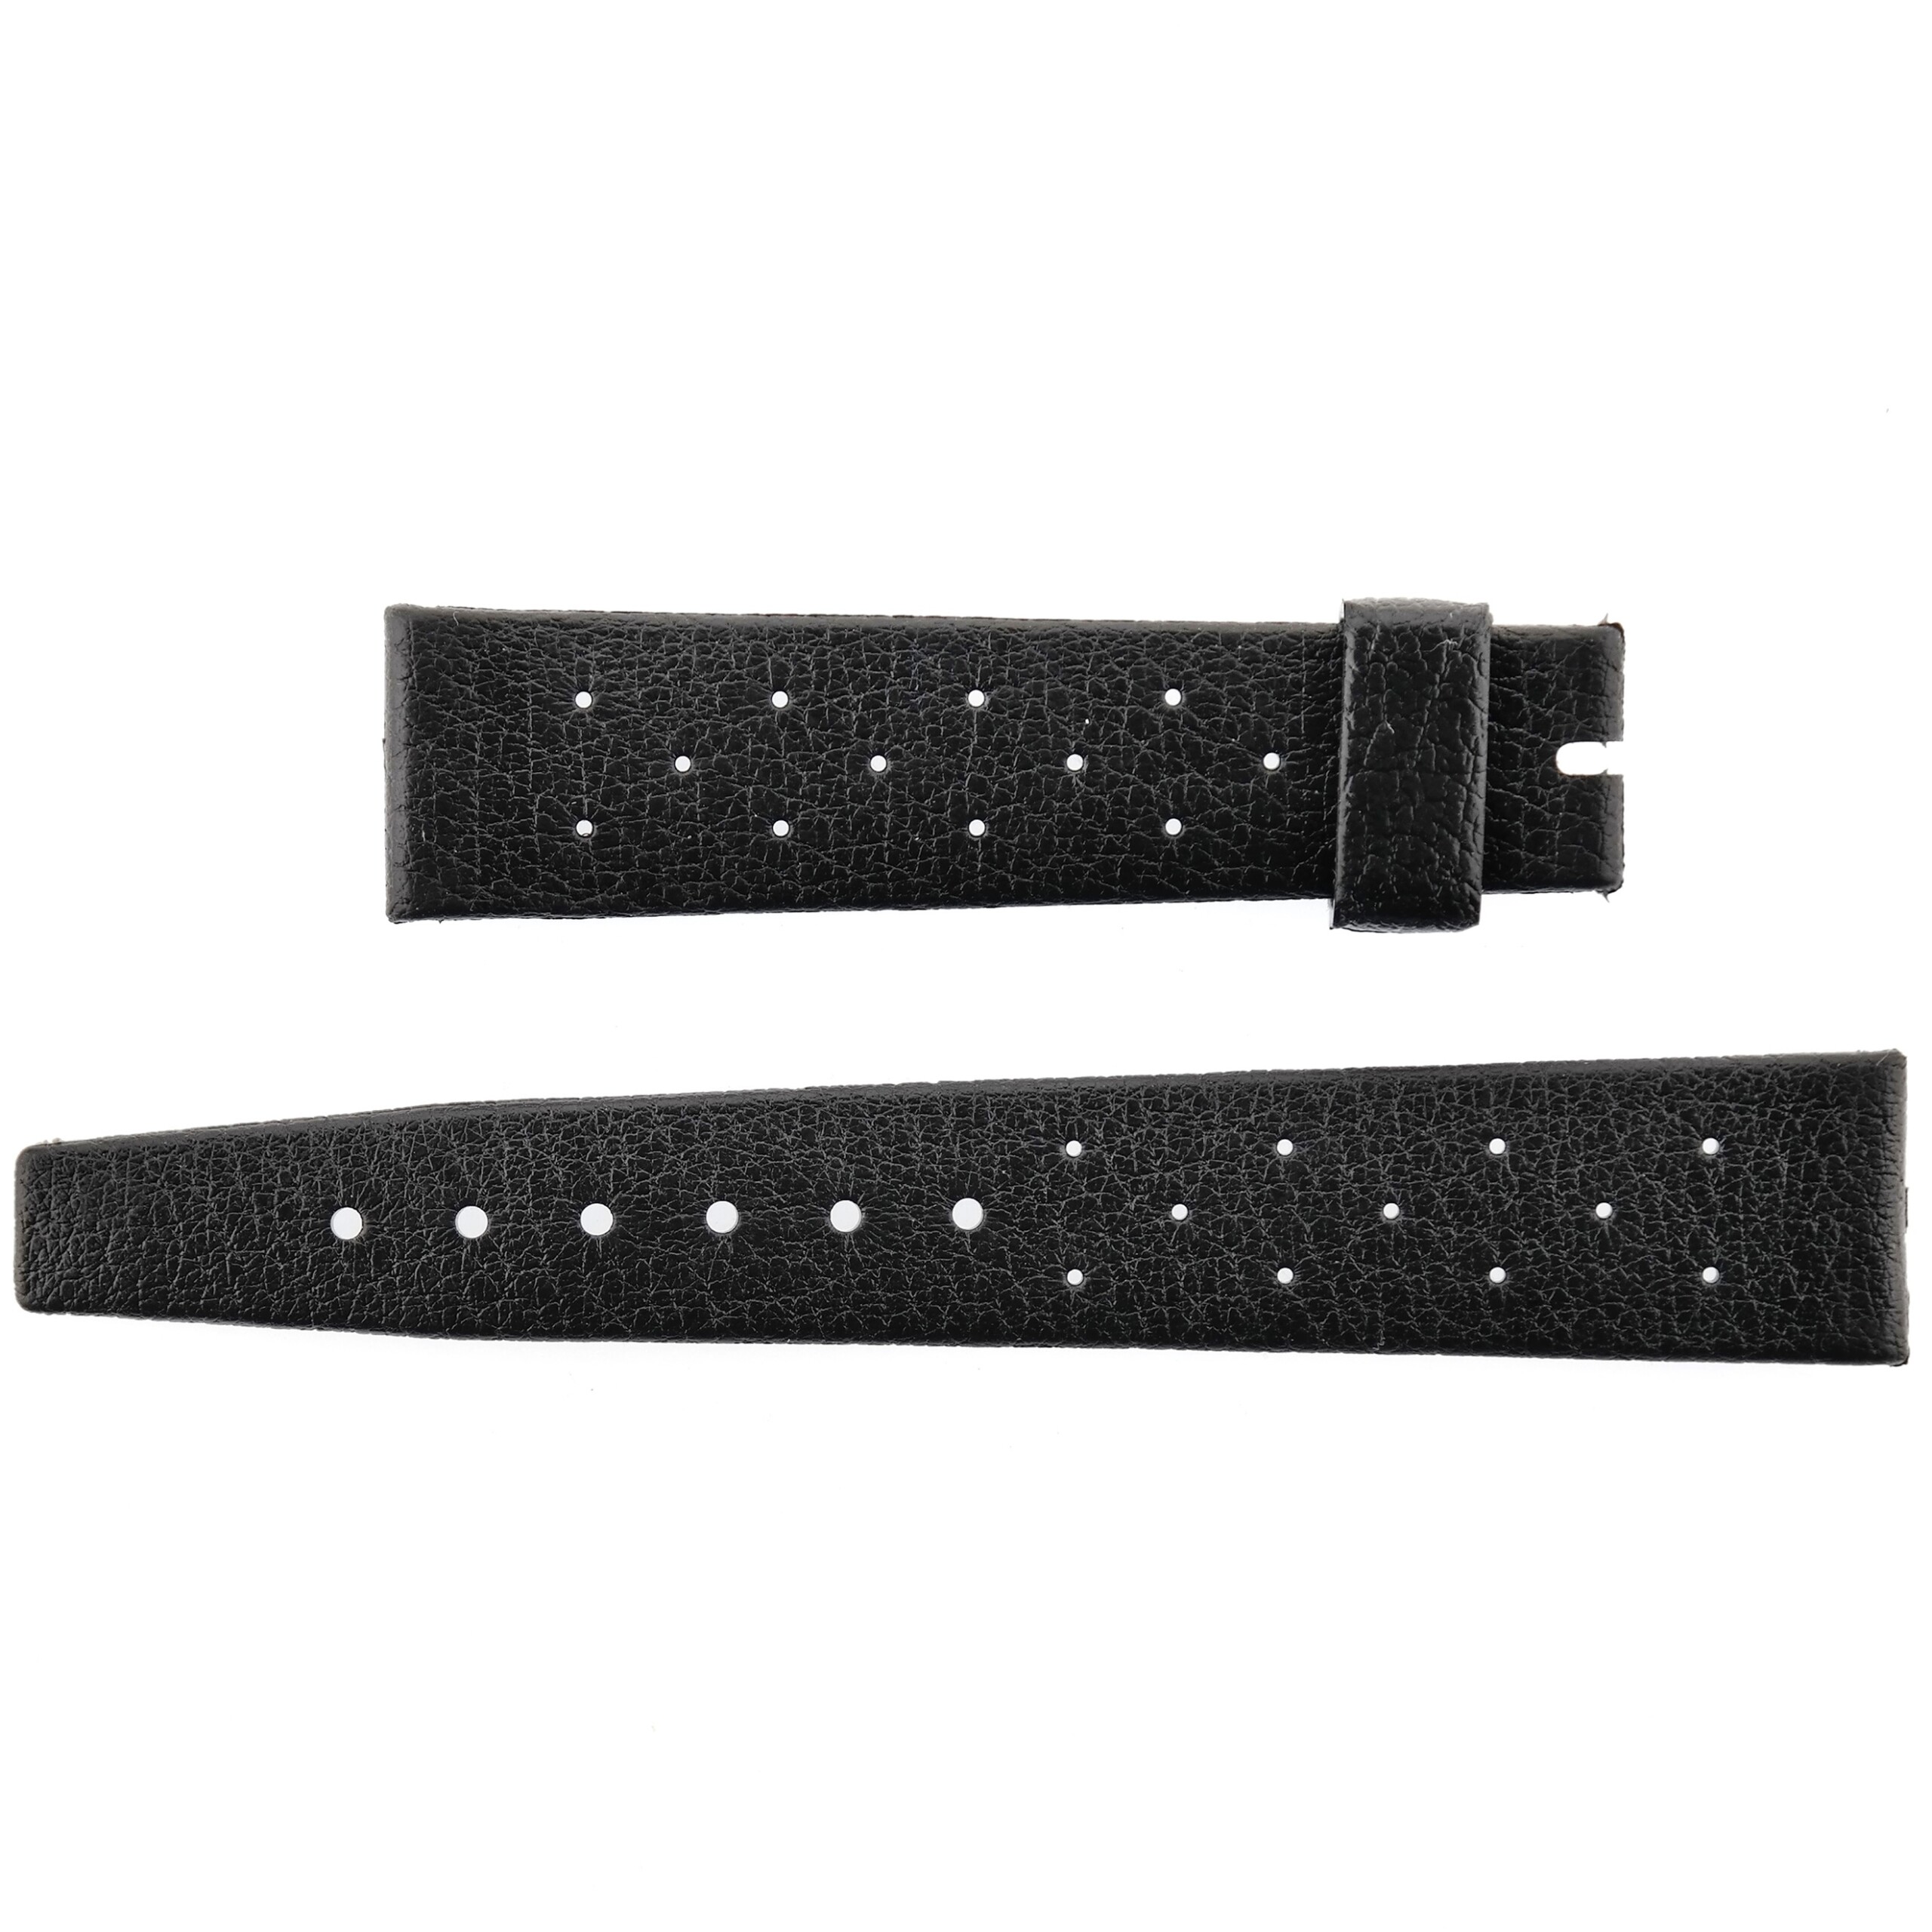 Vintage BESTFIT TROPIC STAR Watch Strap - 23219 - 19 mm - Black - Swiss Made